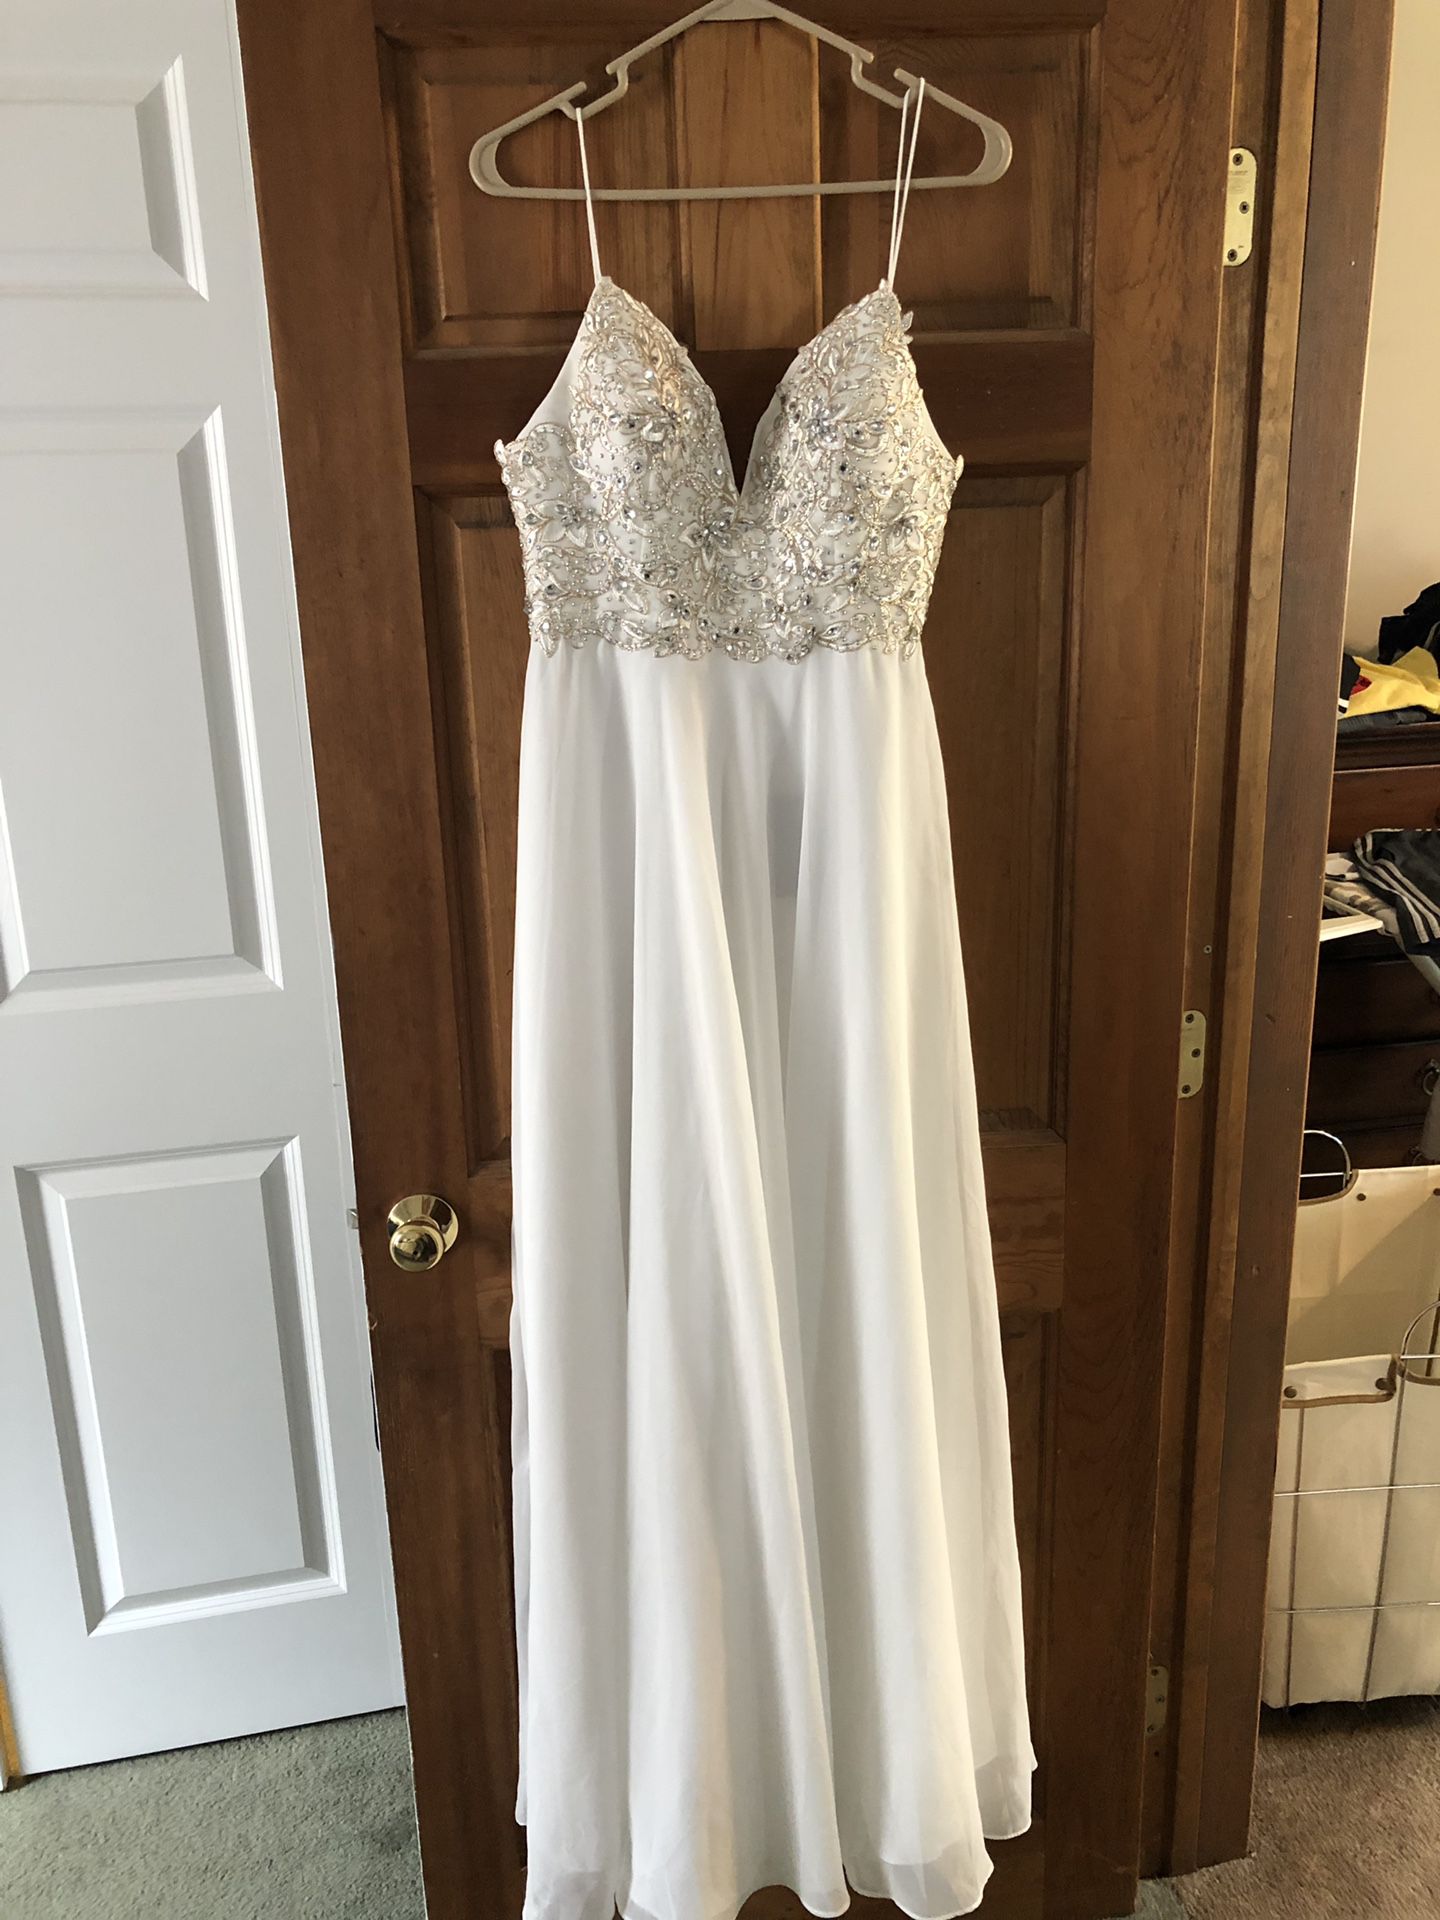 White prom/casual wedding dress